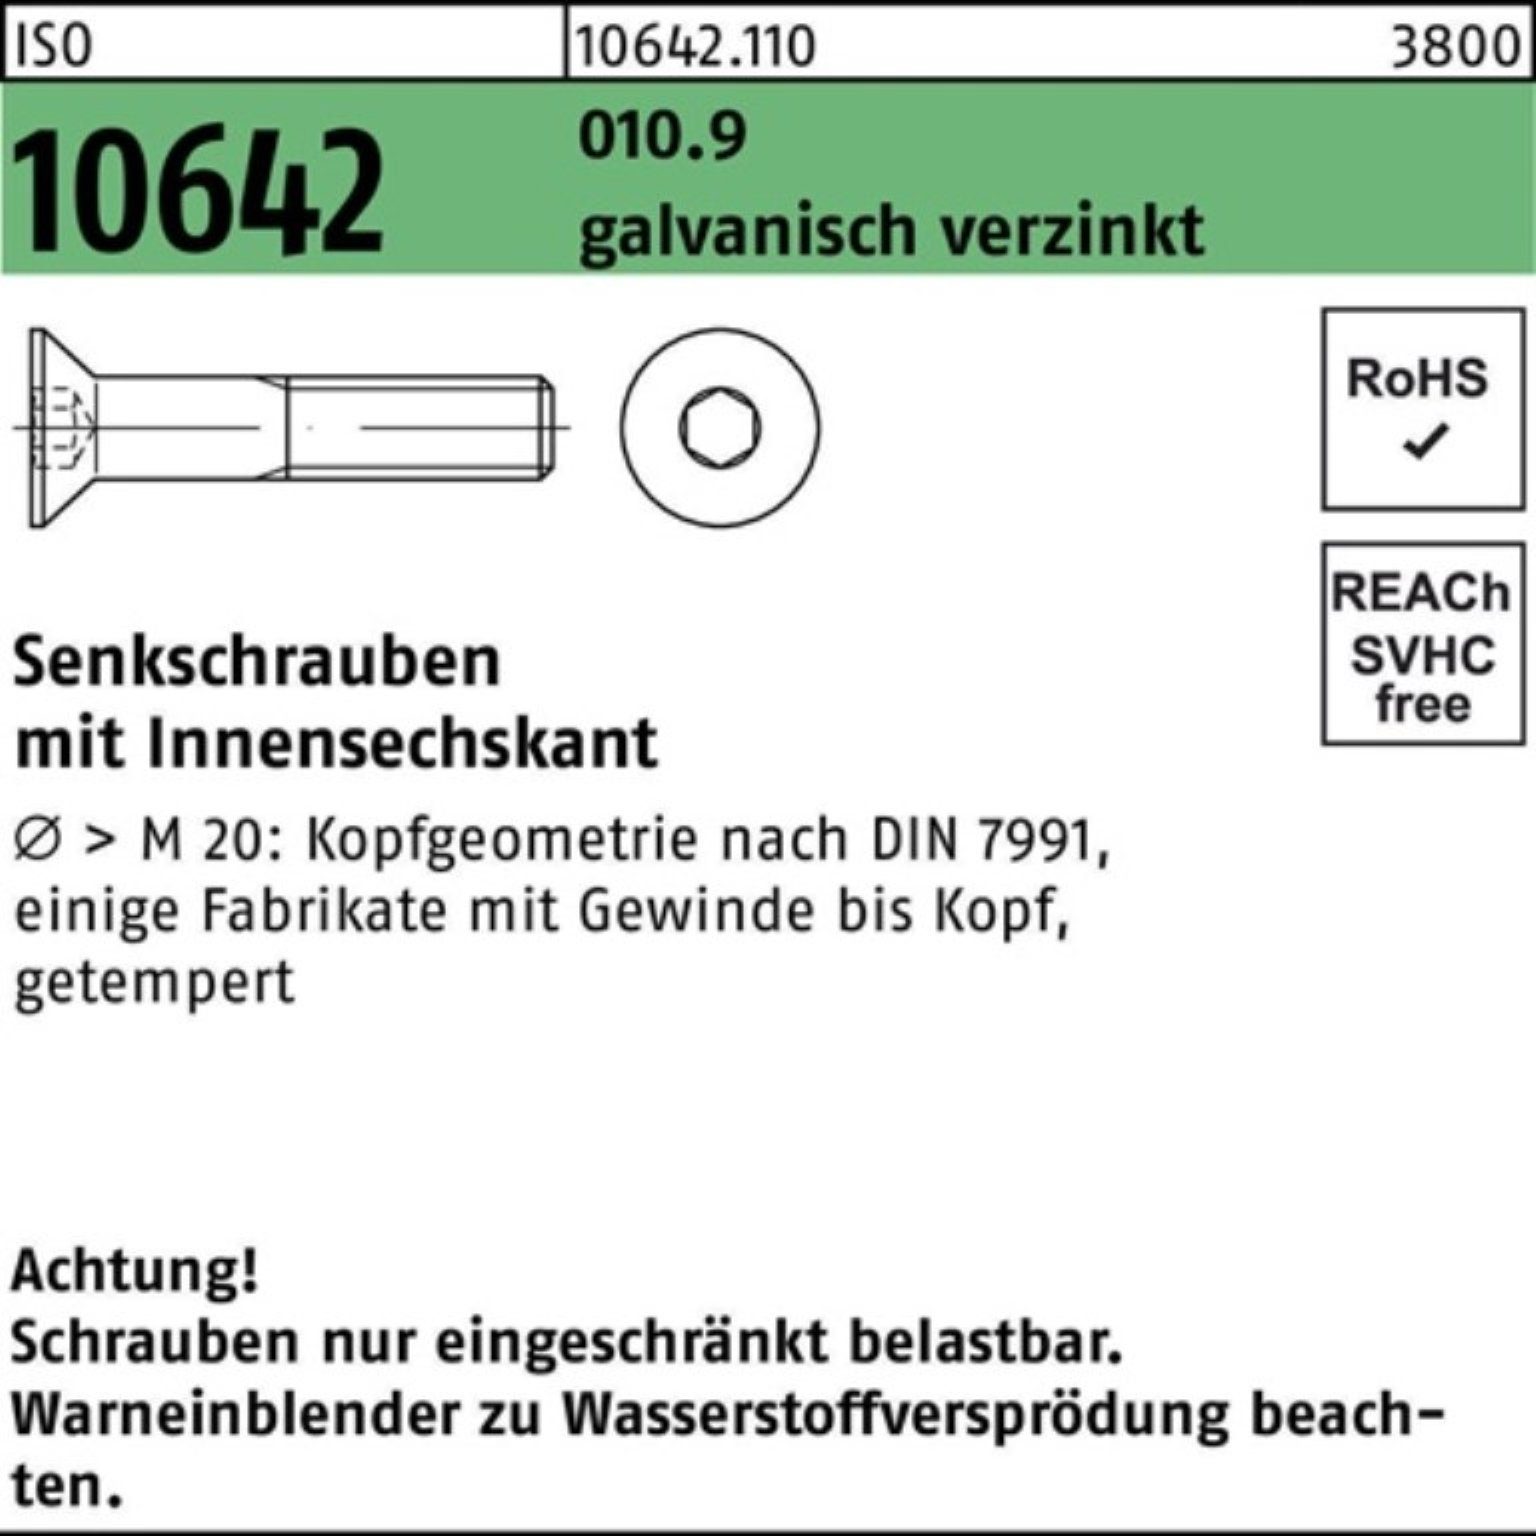 Reyher Senkschraube 200er Pack Senkschraube ISO 10642 Innen-6kt M8x 16 010.9 galv.verz. 20